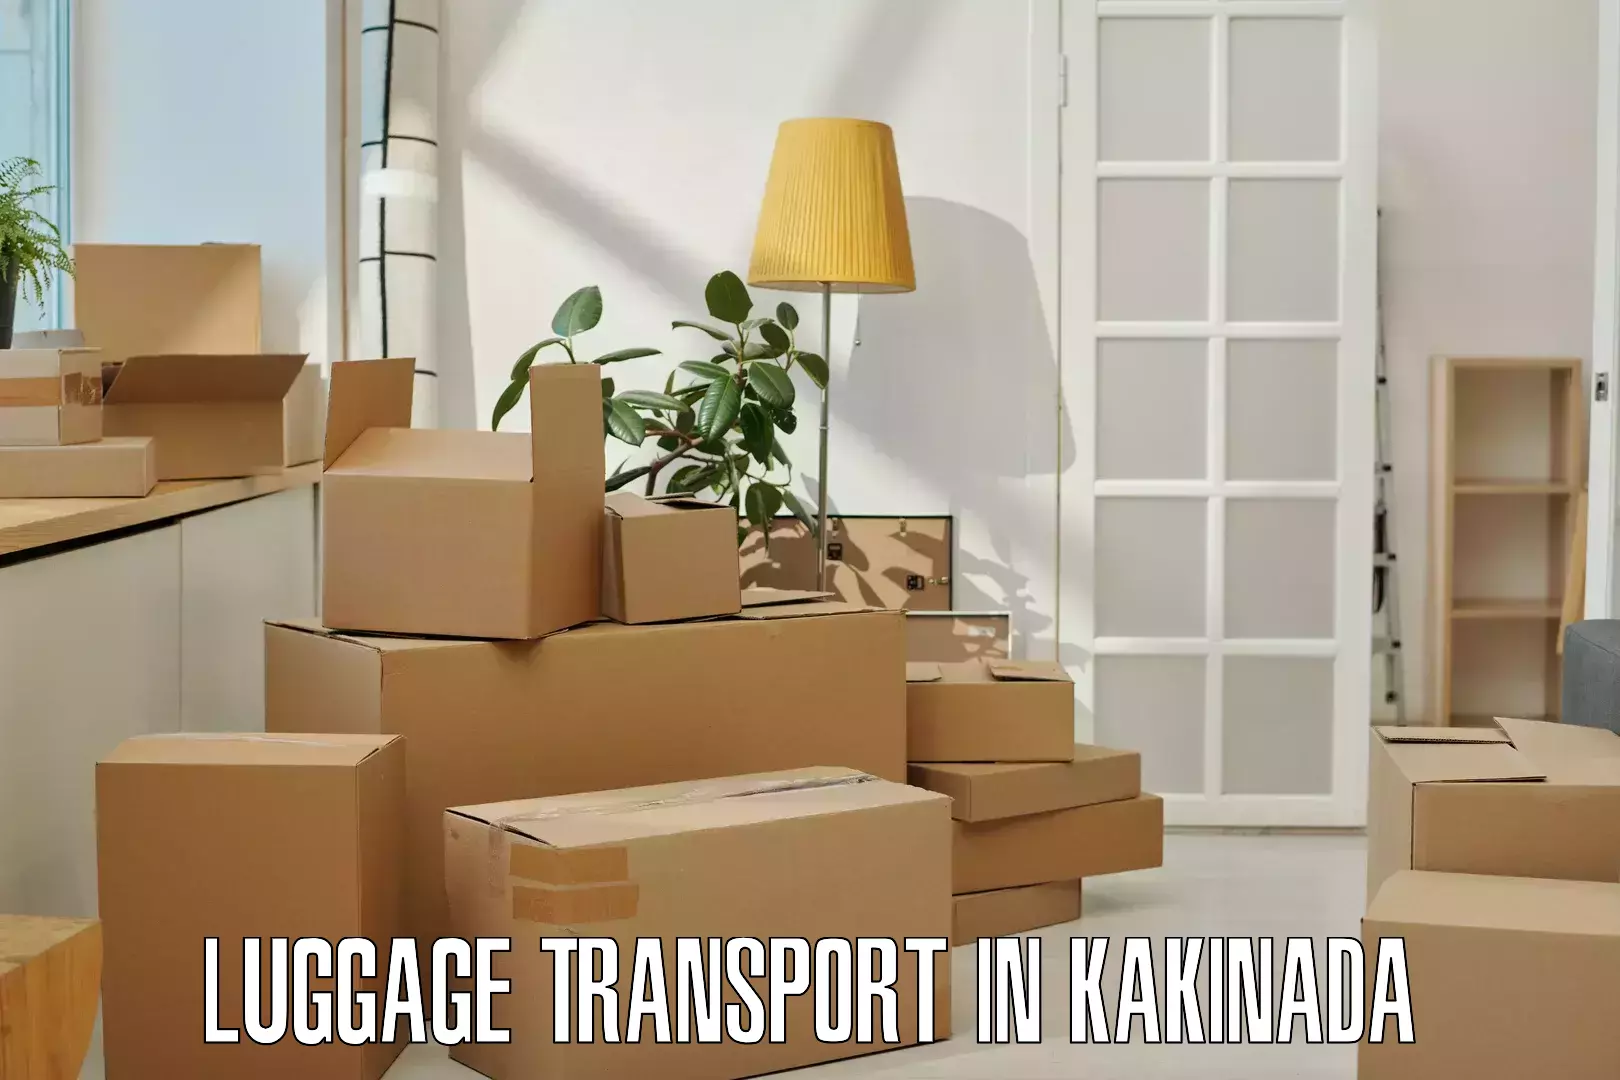 Business luggage transport in Kakinada